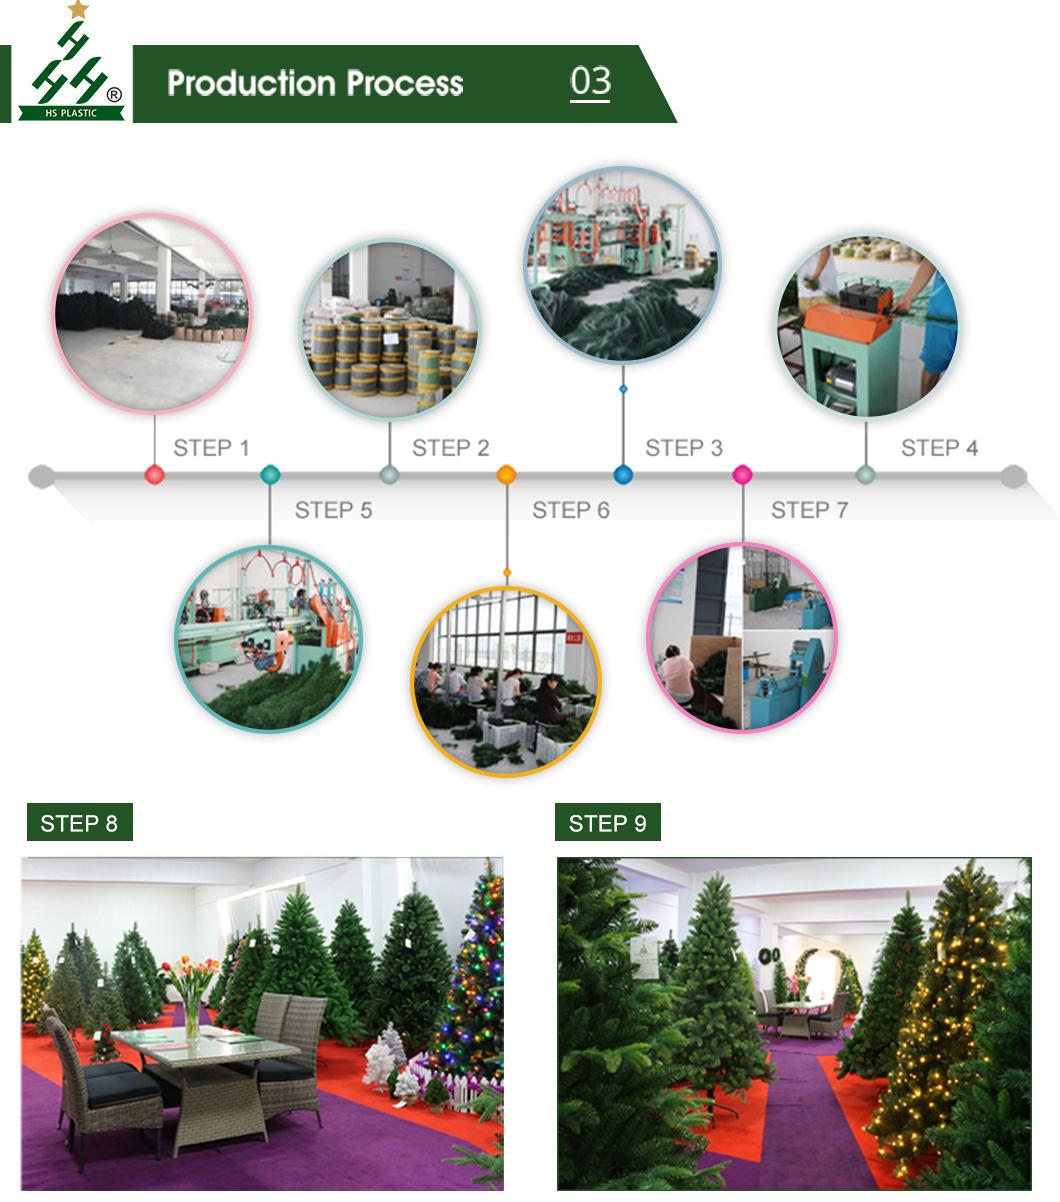 7FT Green PVC Tips Full Christmas Tree, Hinged Construction